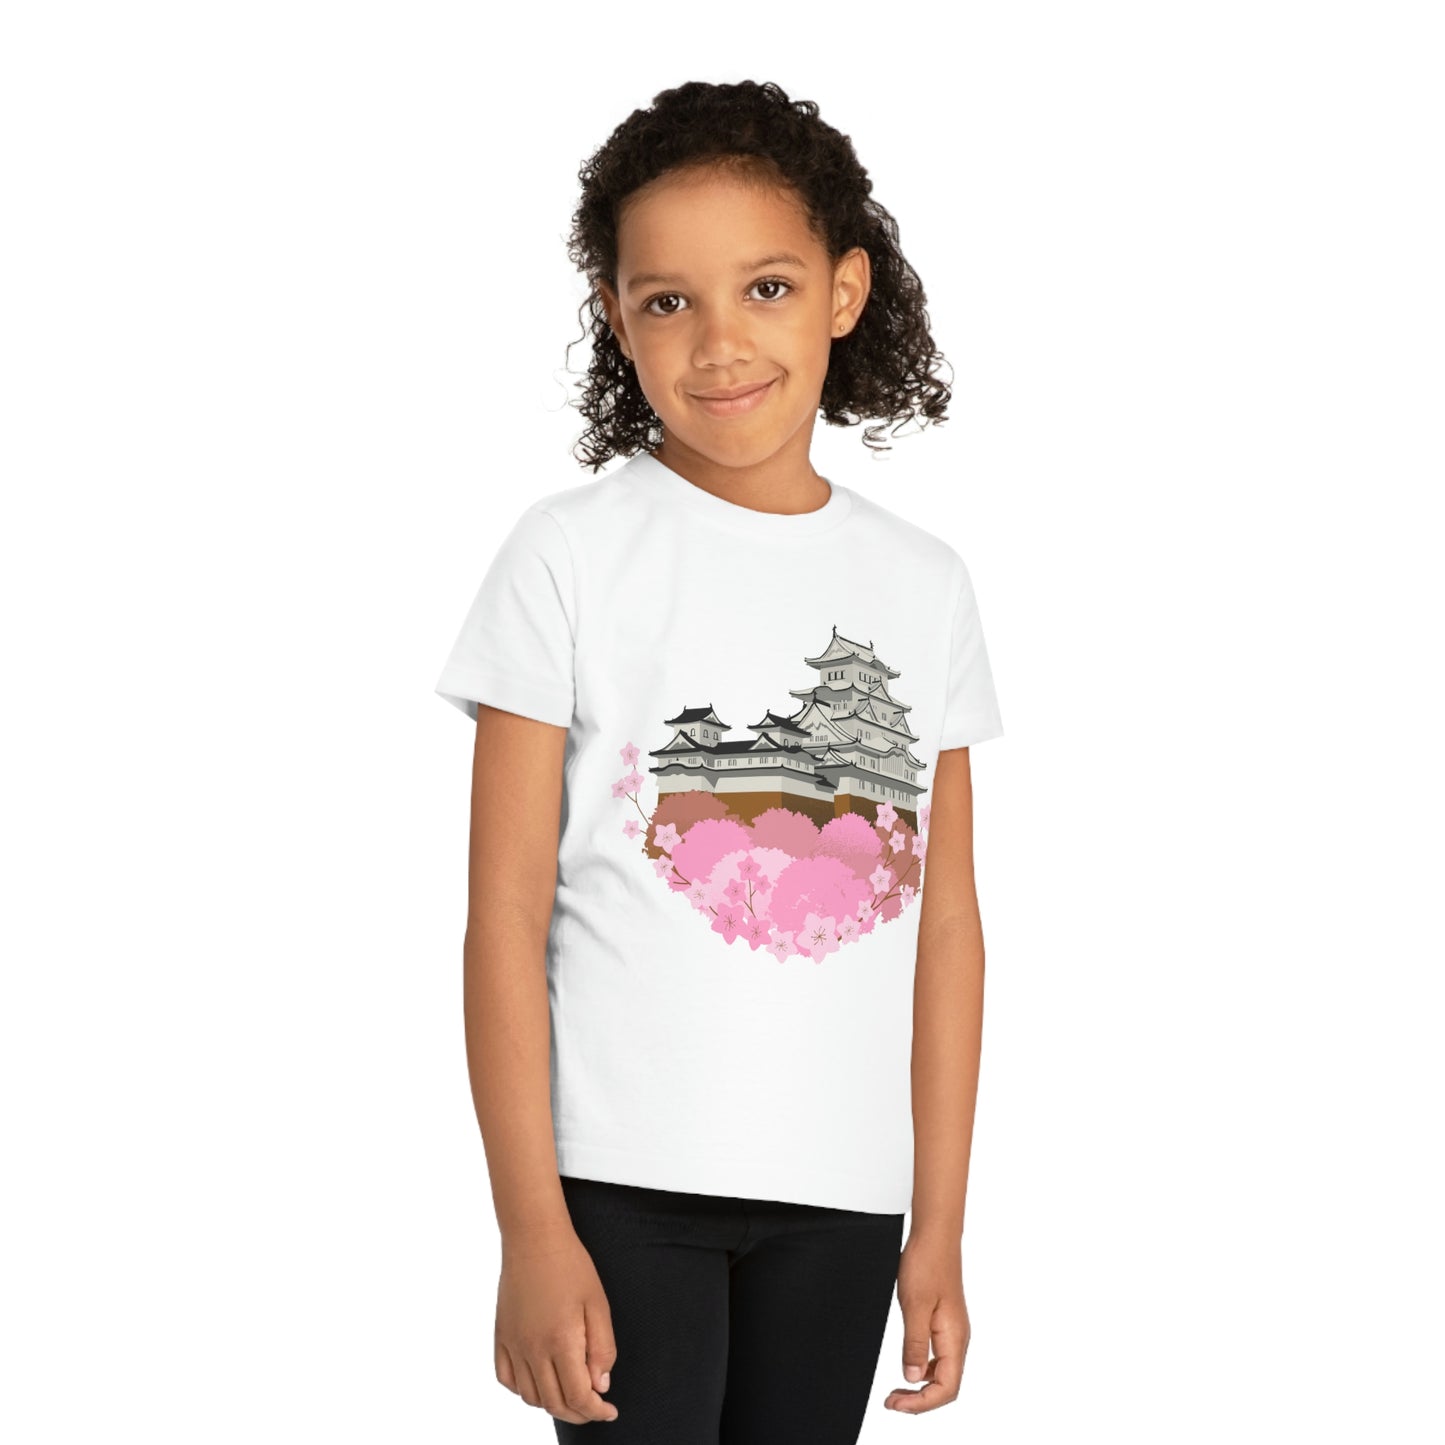 Art Work Collection - Kids' T-Shirt - Cherry Blossom v1